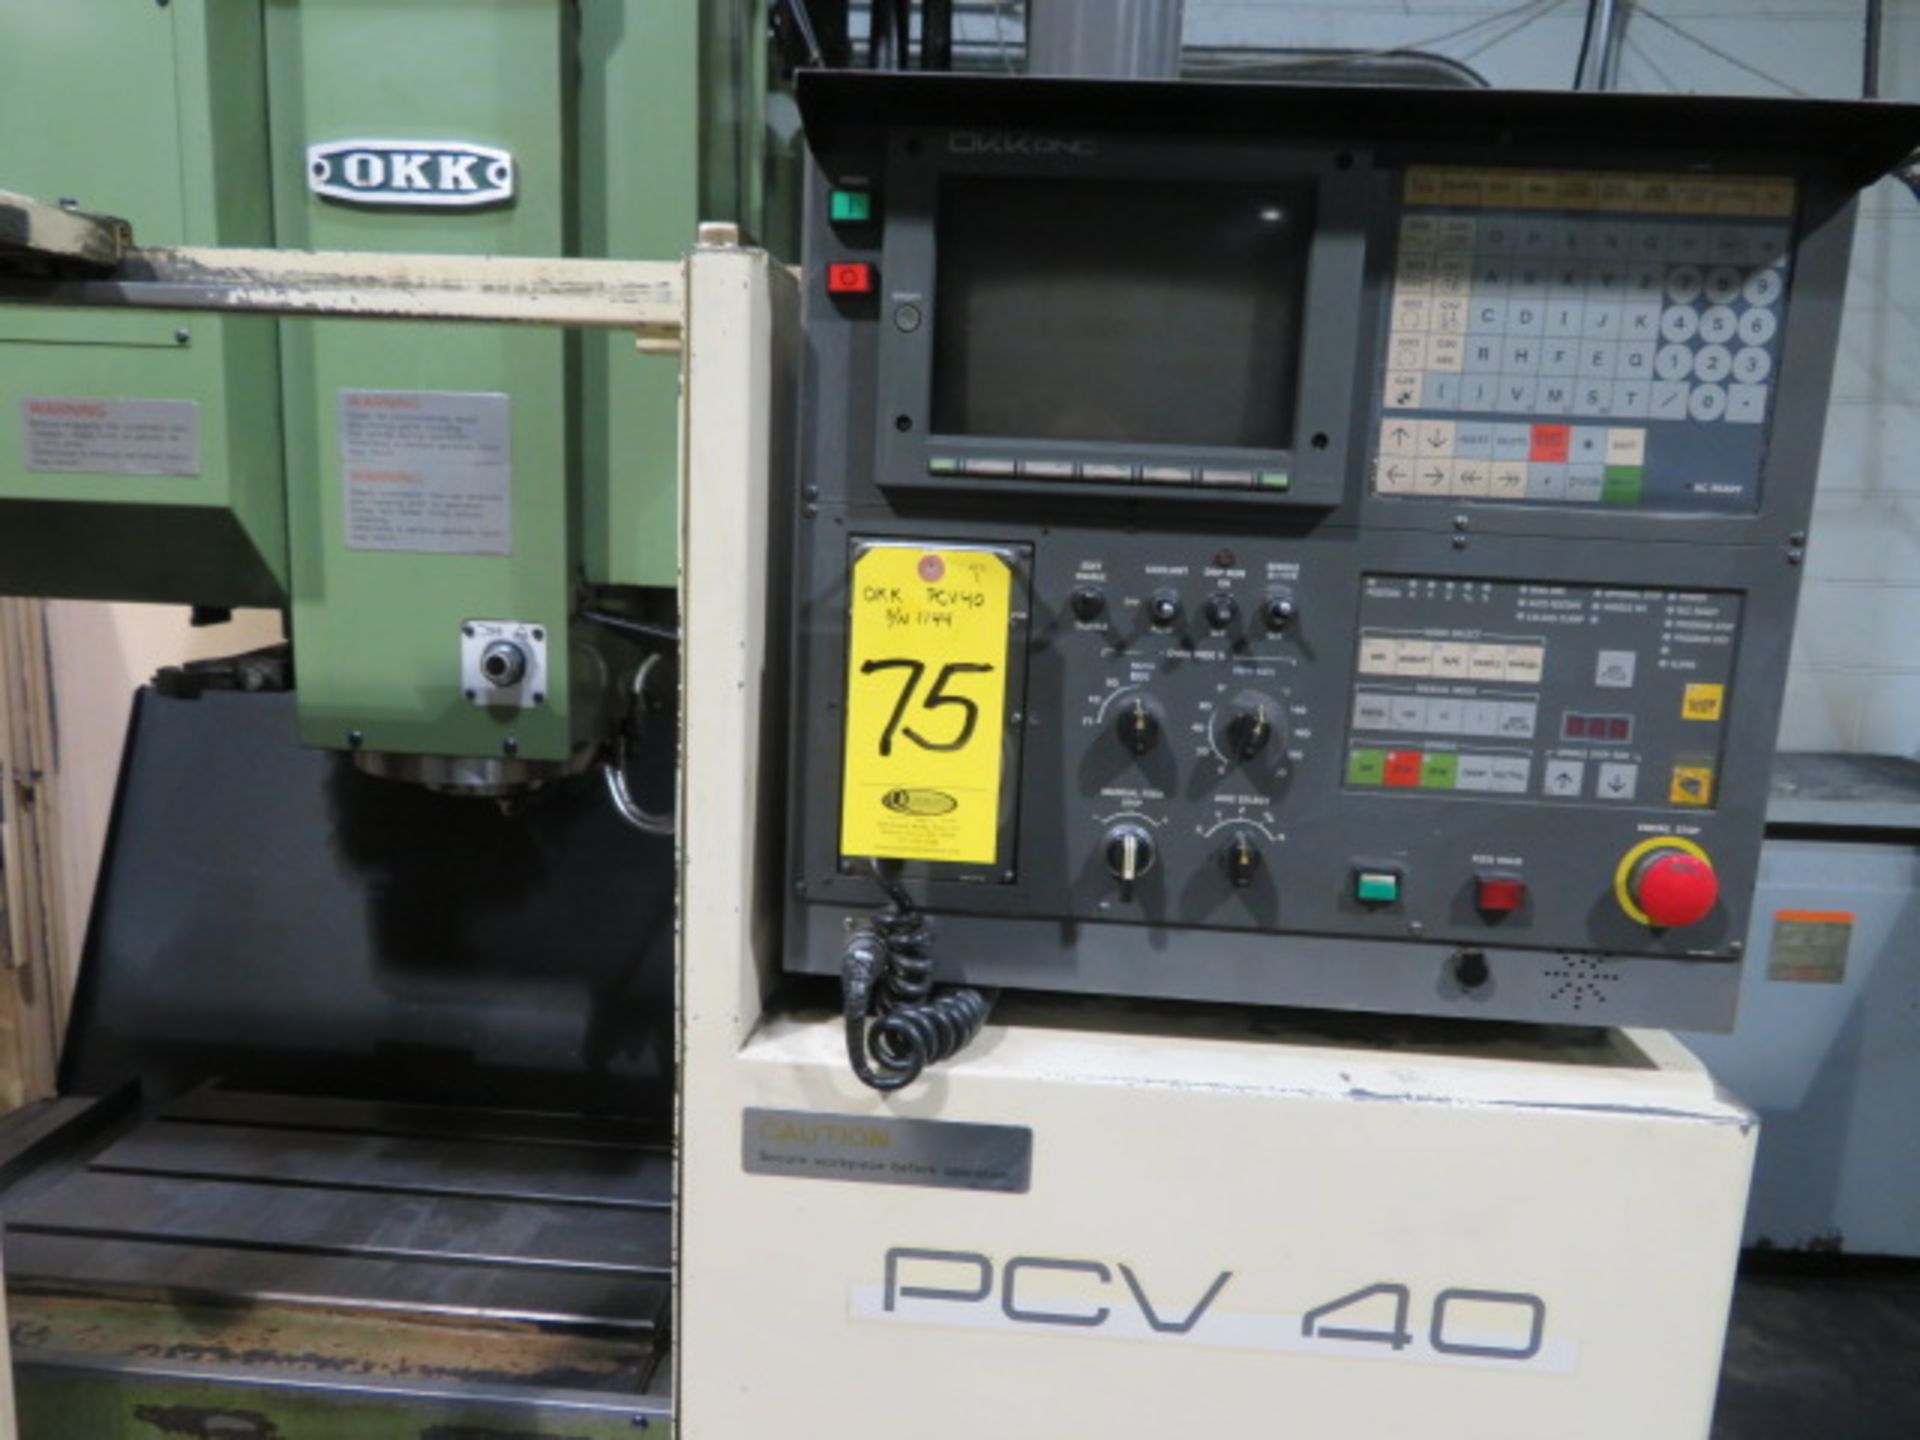 OKK PCV-40 CNC VERTICAL MACHINING CENTER, S/N 1144/MA46046 (8,000 RPM), MELDAS 300 CNC CONTROL - Image 2 of 5